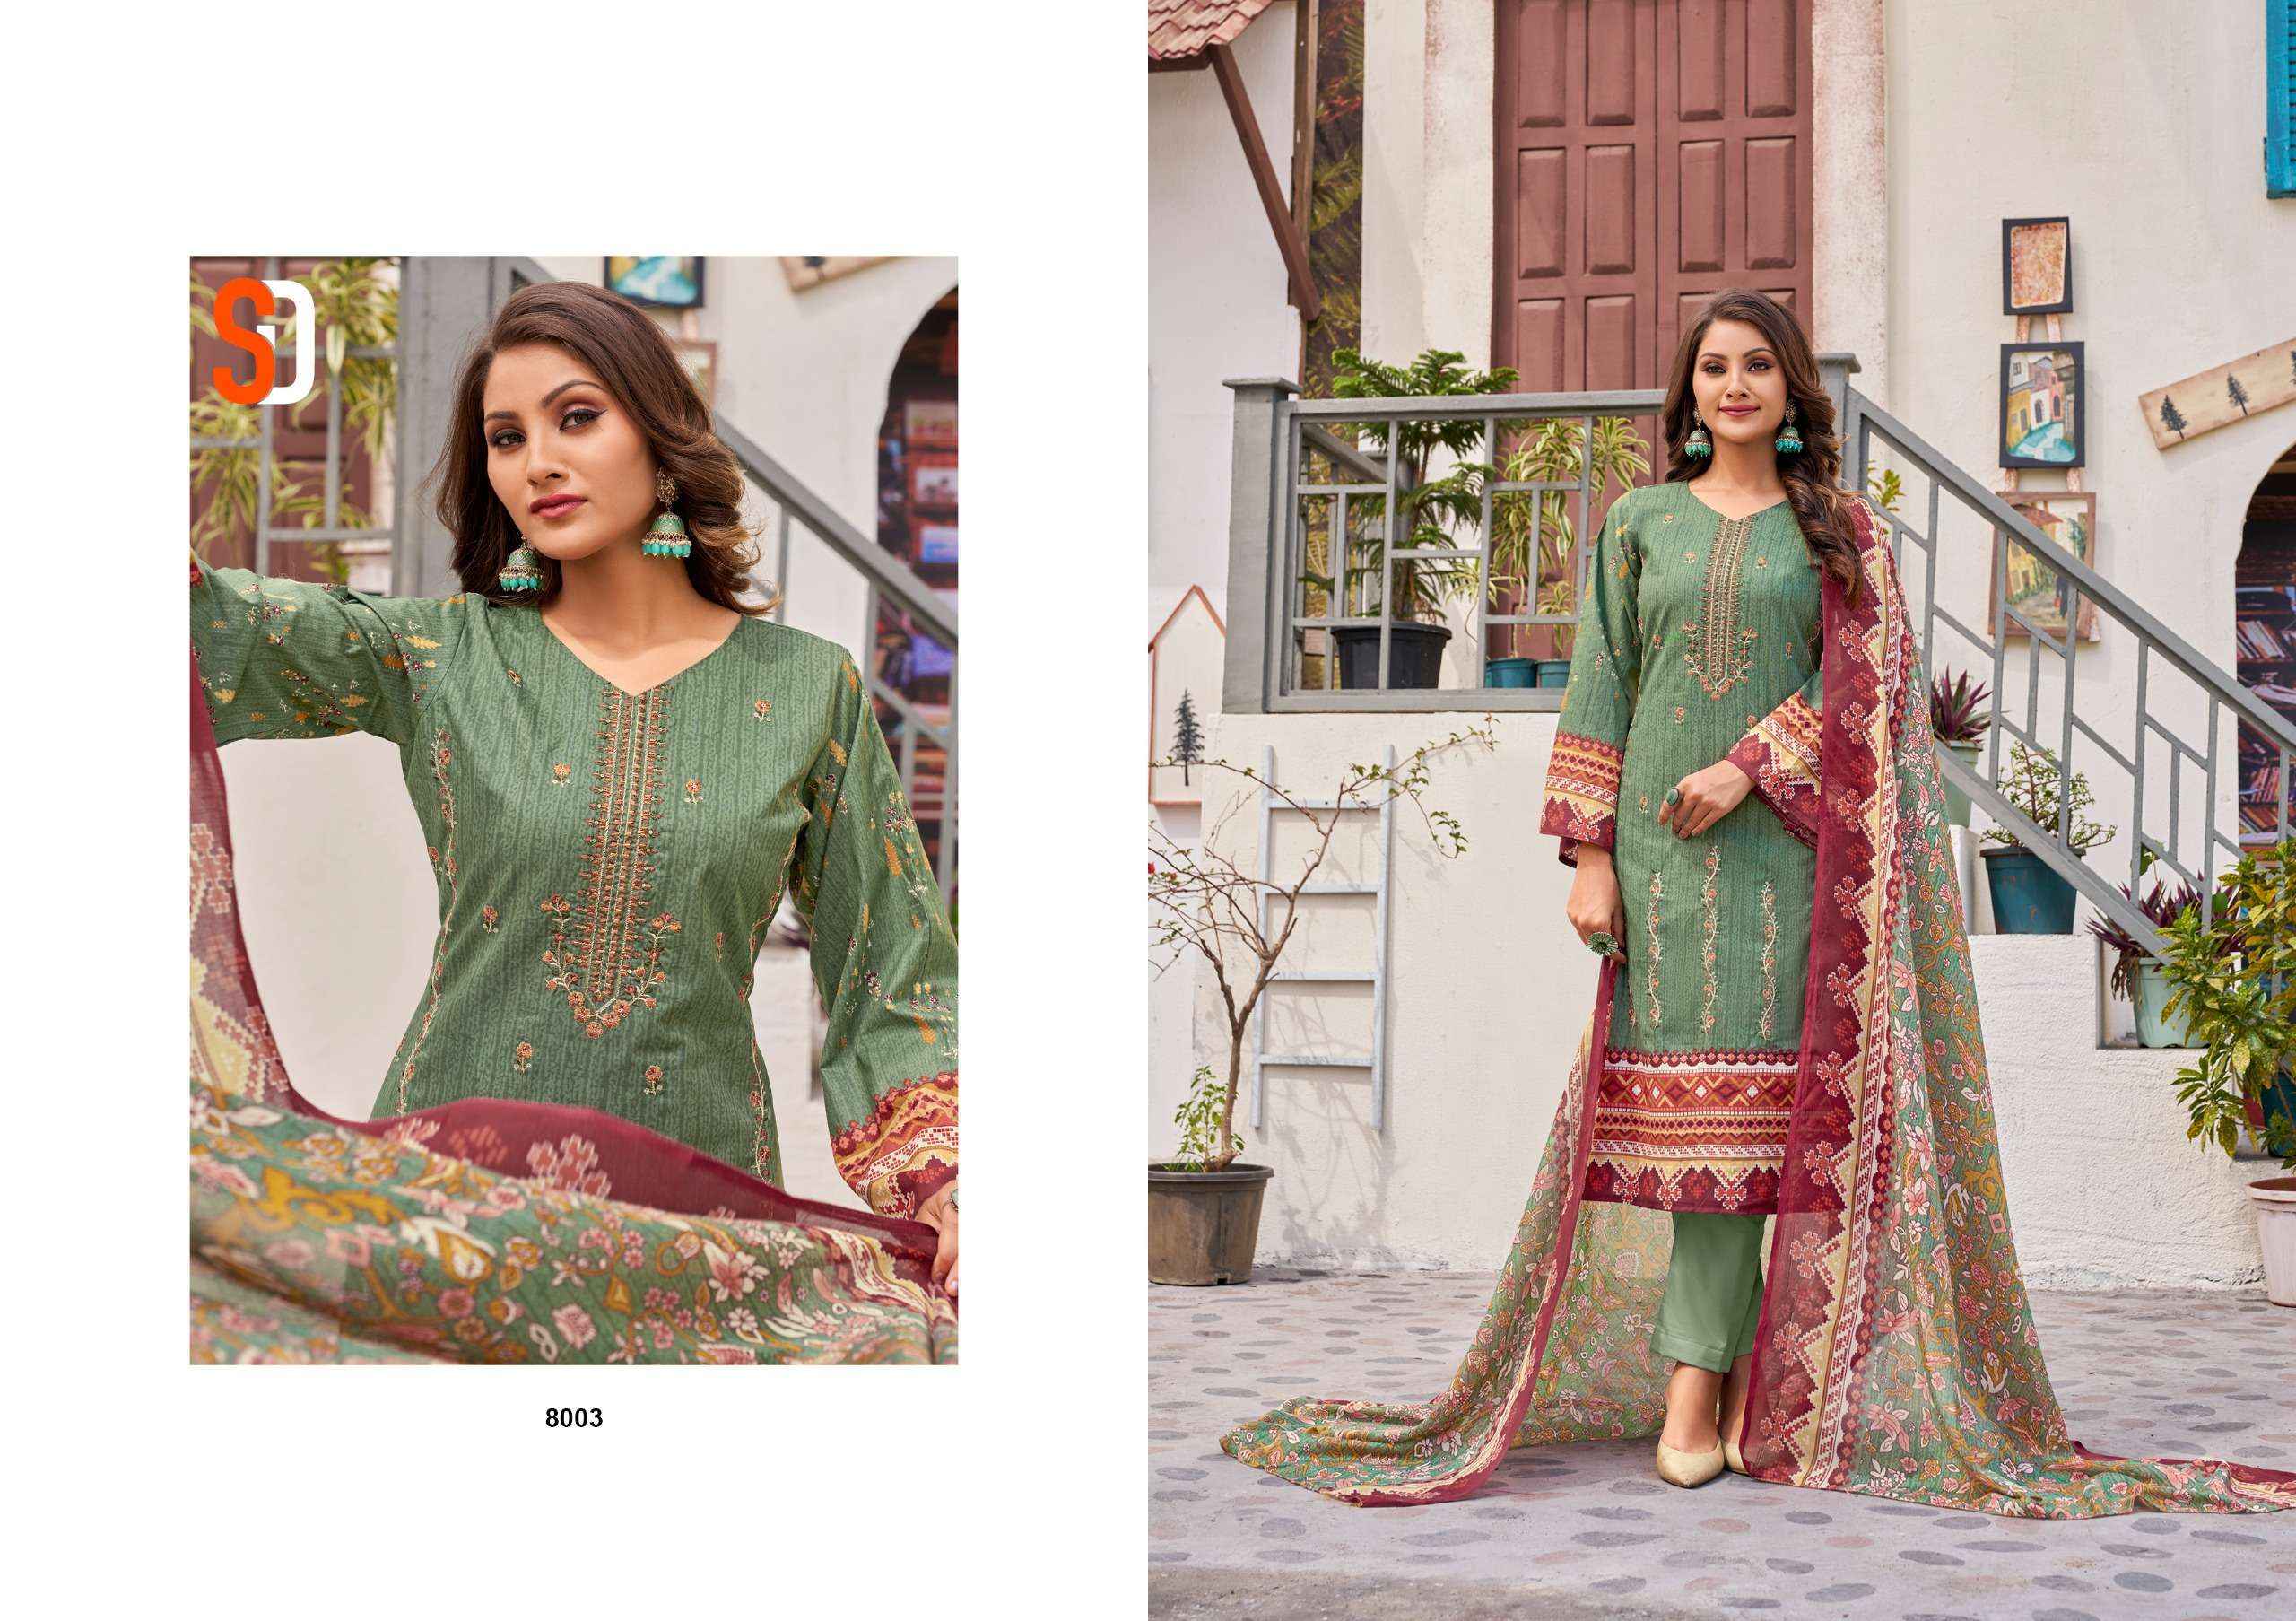 Shraddha Designer Bin Saeed Lawn Collection Vol 8 Cotton Dress Material 6 pc Cataloge